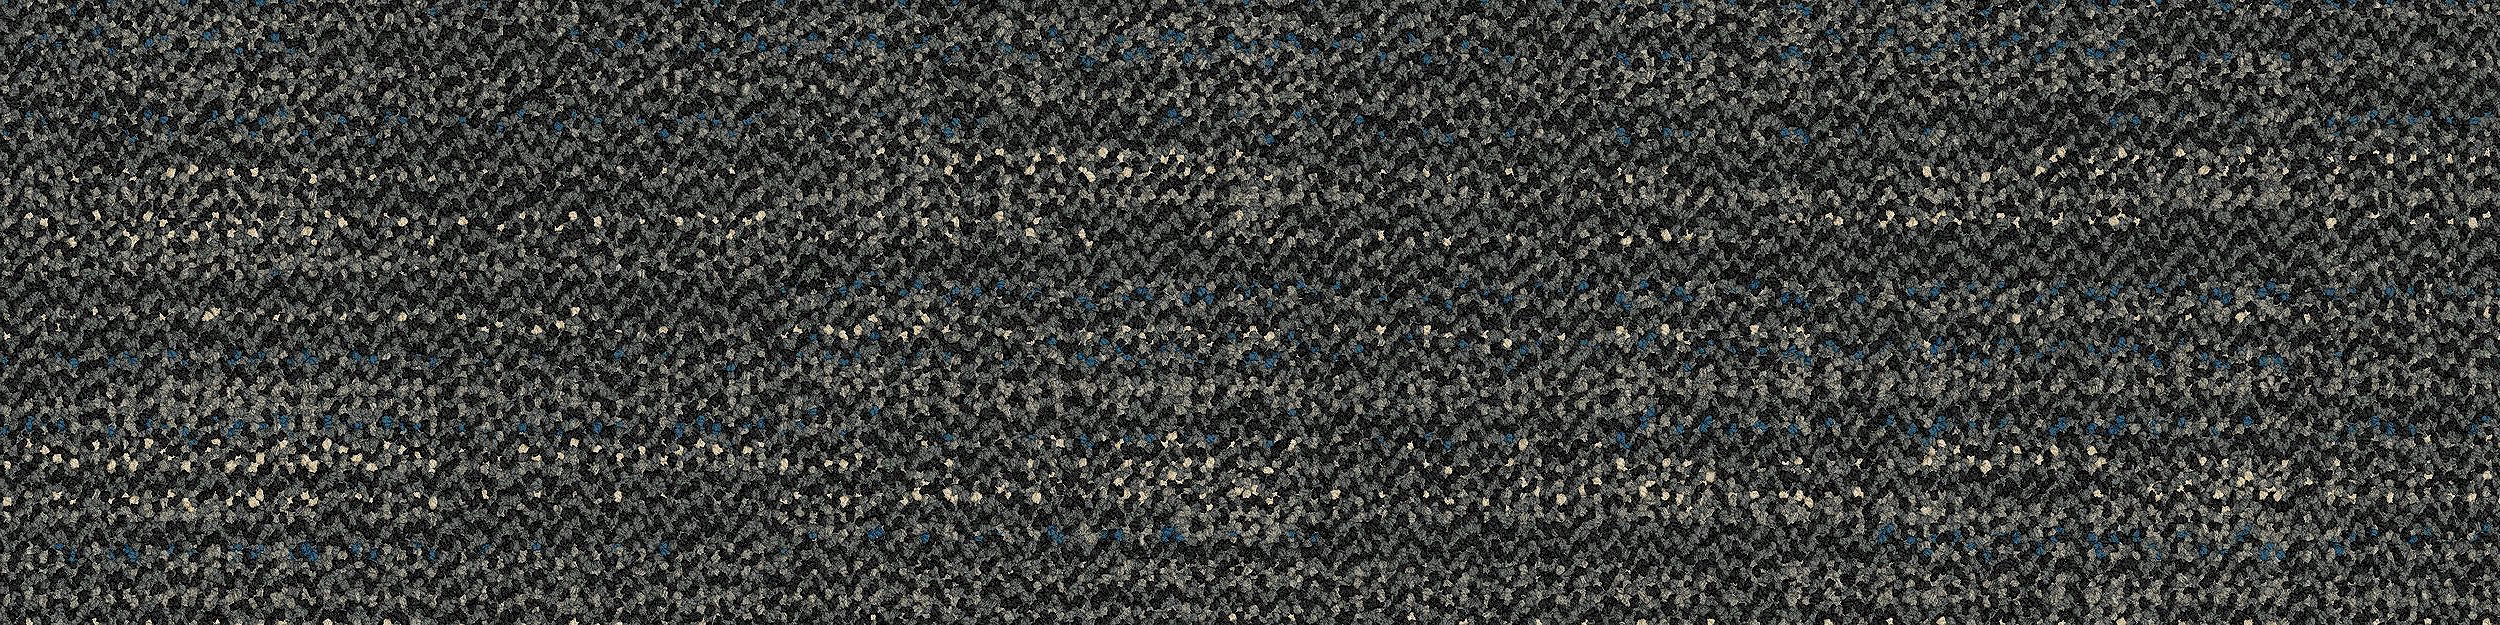 Bitrate Carpet Tile In Dark Aqua numéro d’image 7